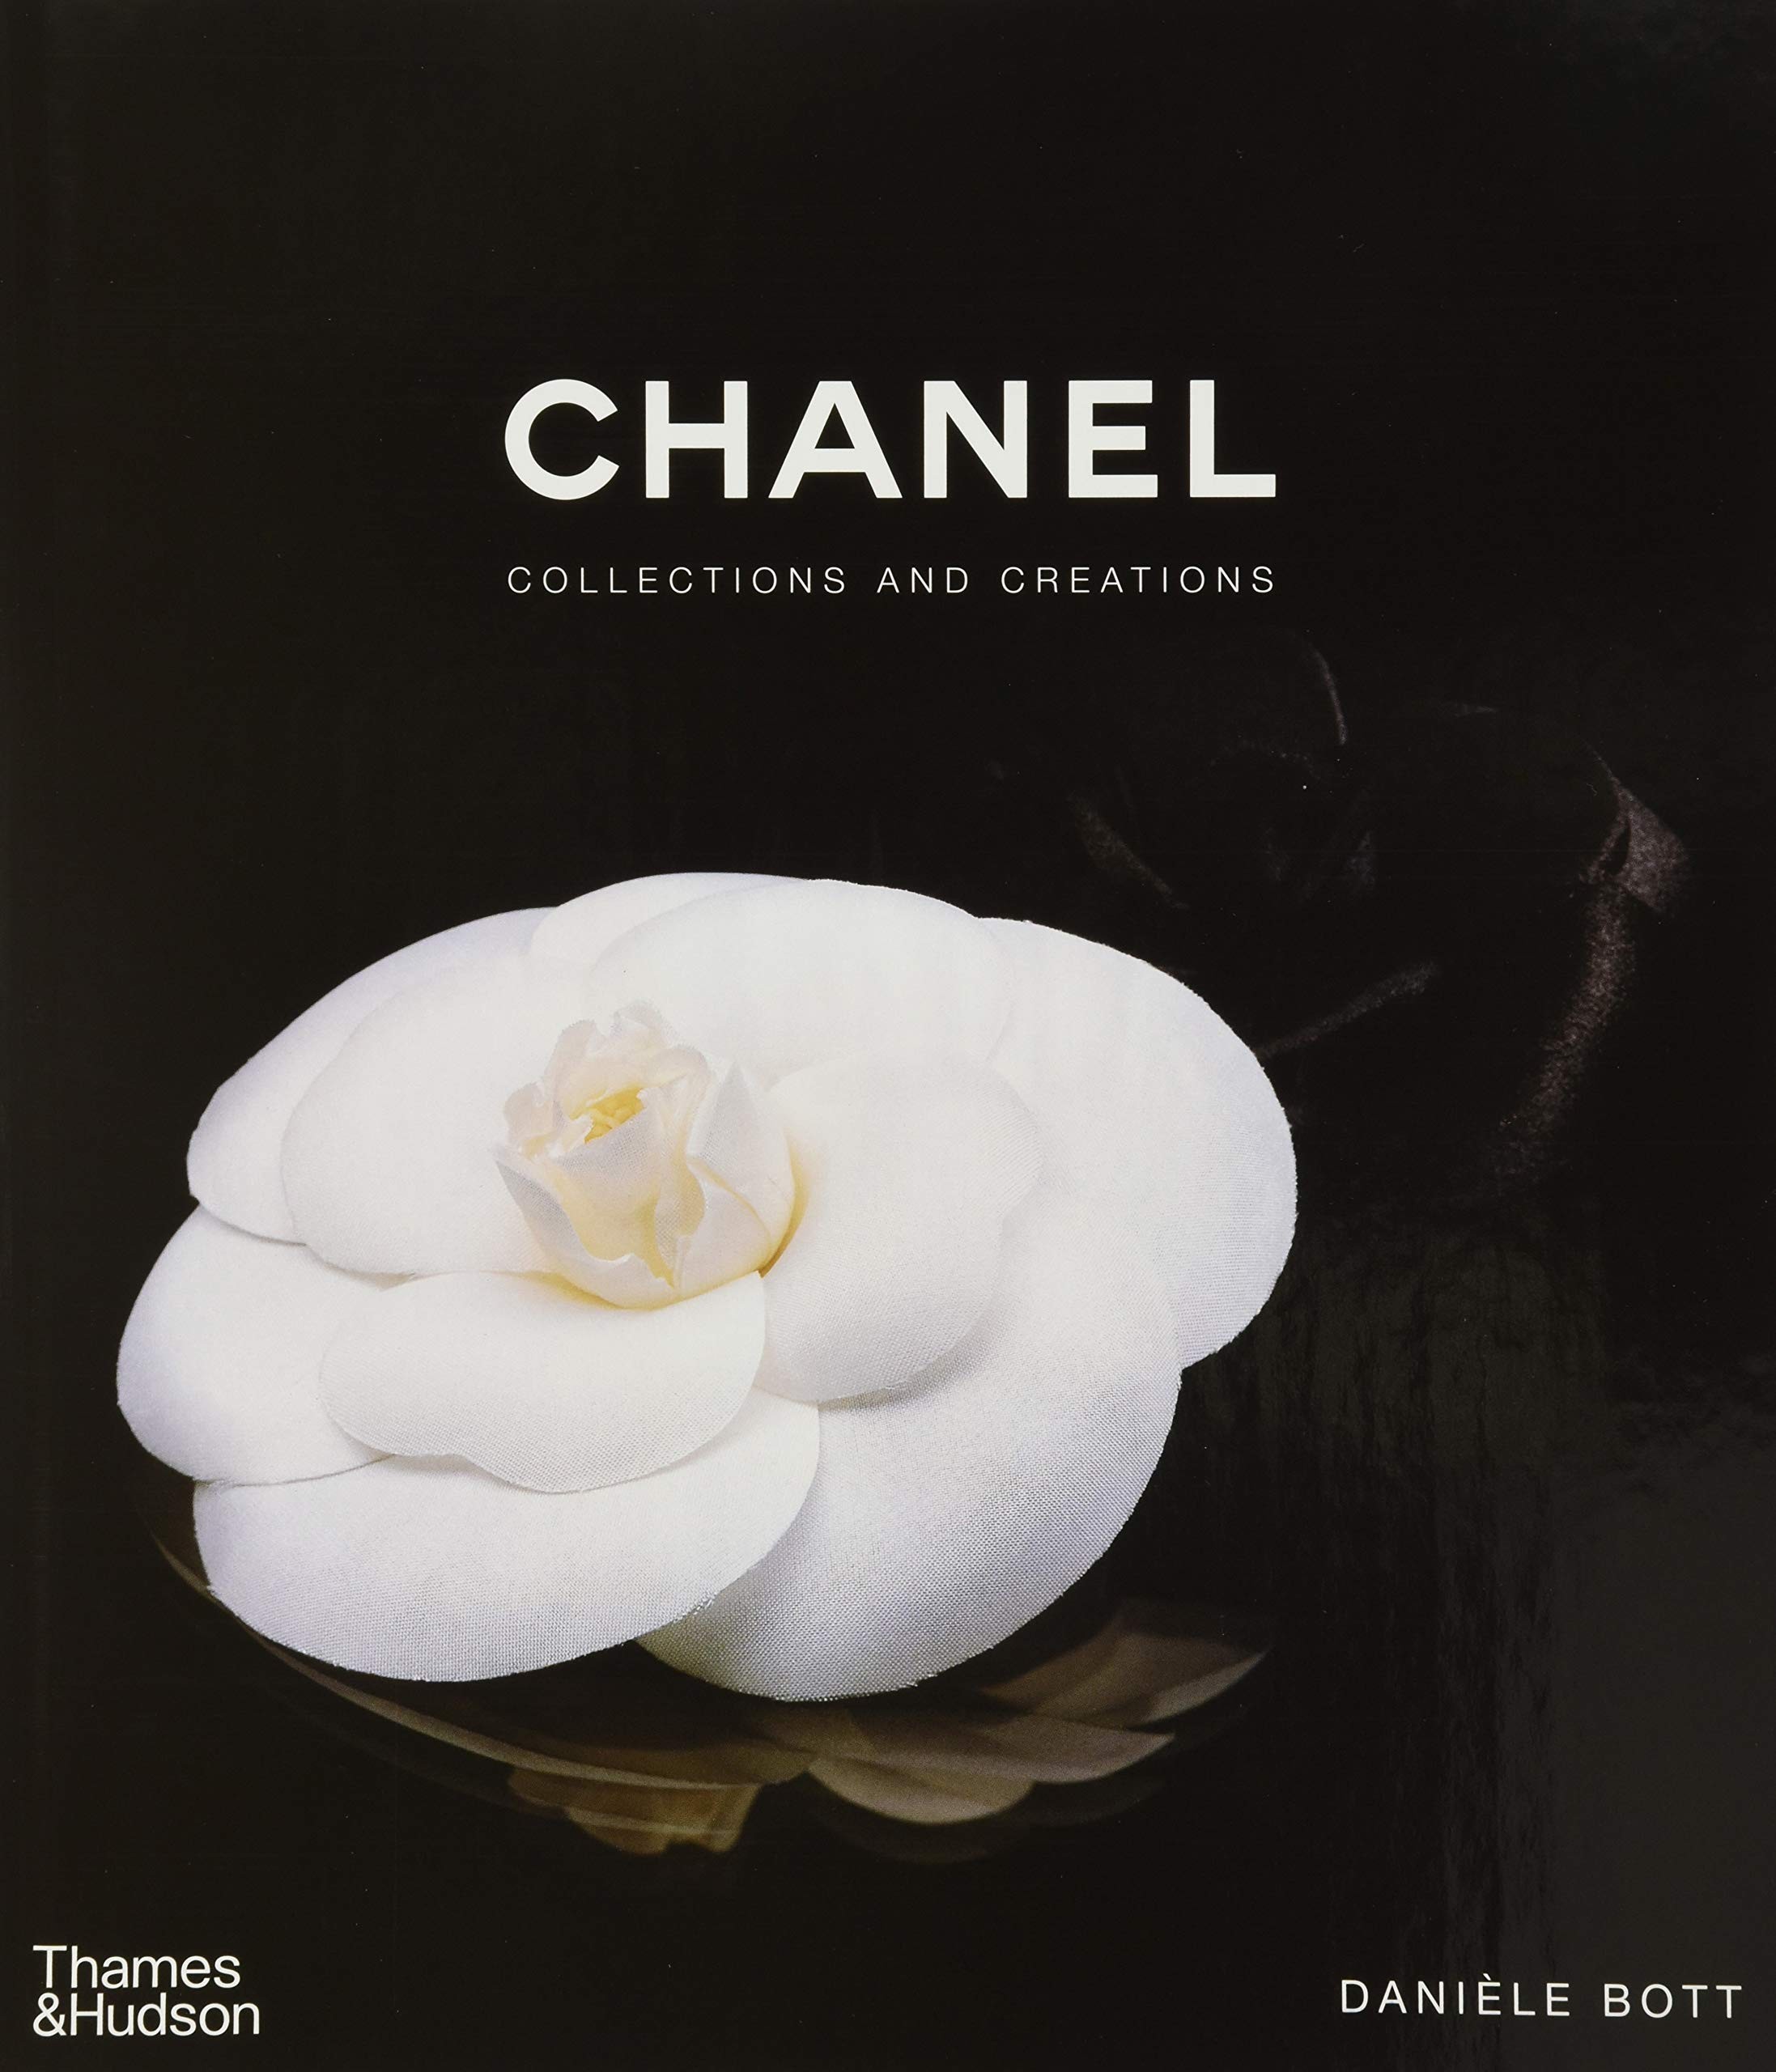 Chanel: Collections and Creations, por Daniele Bott (Foto: Reprodução/ Amazon)